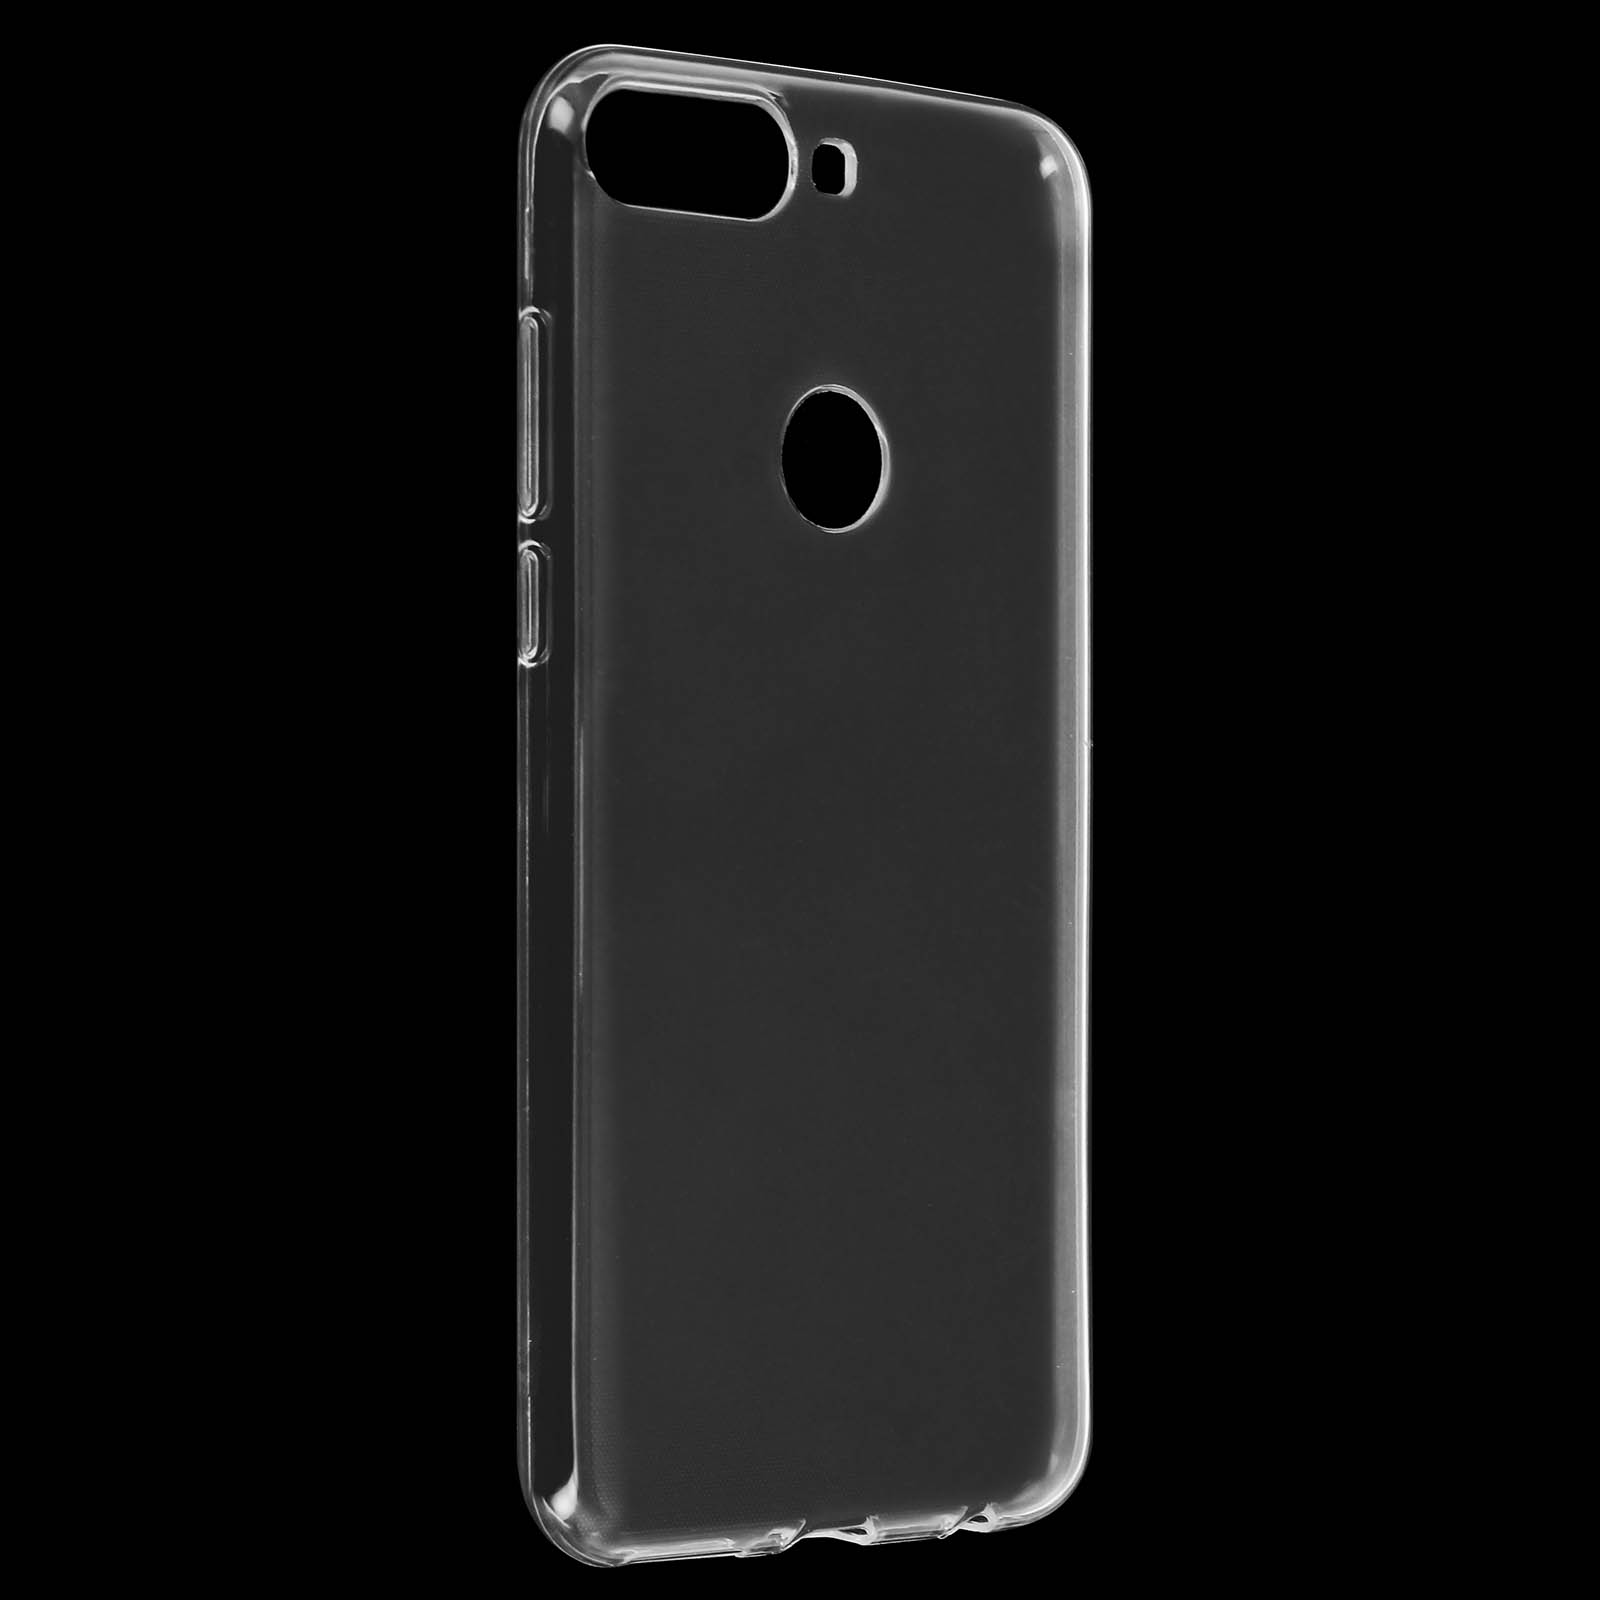 Y7 Backcover, Huawei, Skin Series, AVIZAR Transparent 2018,